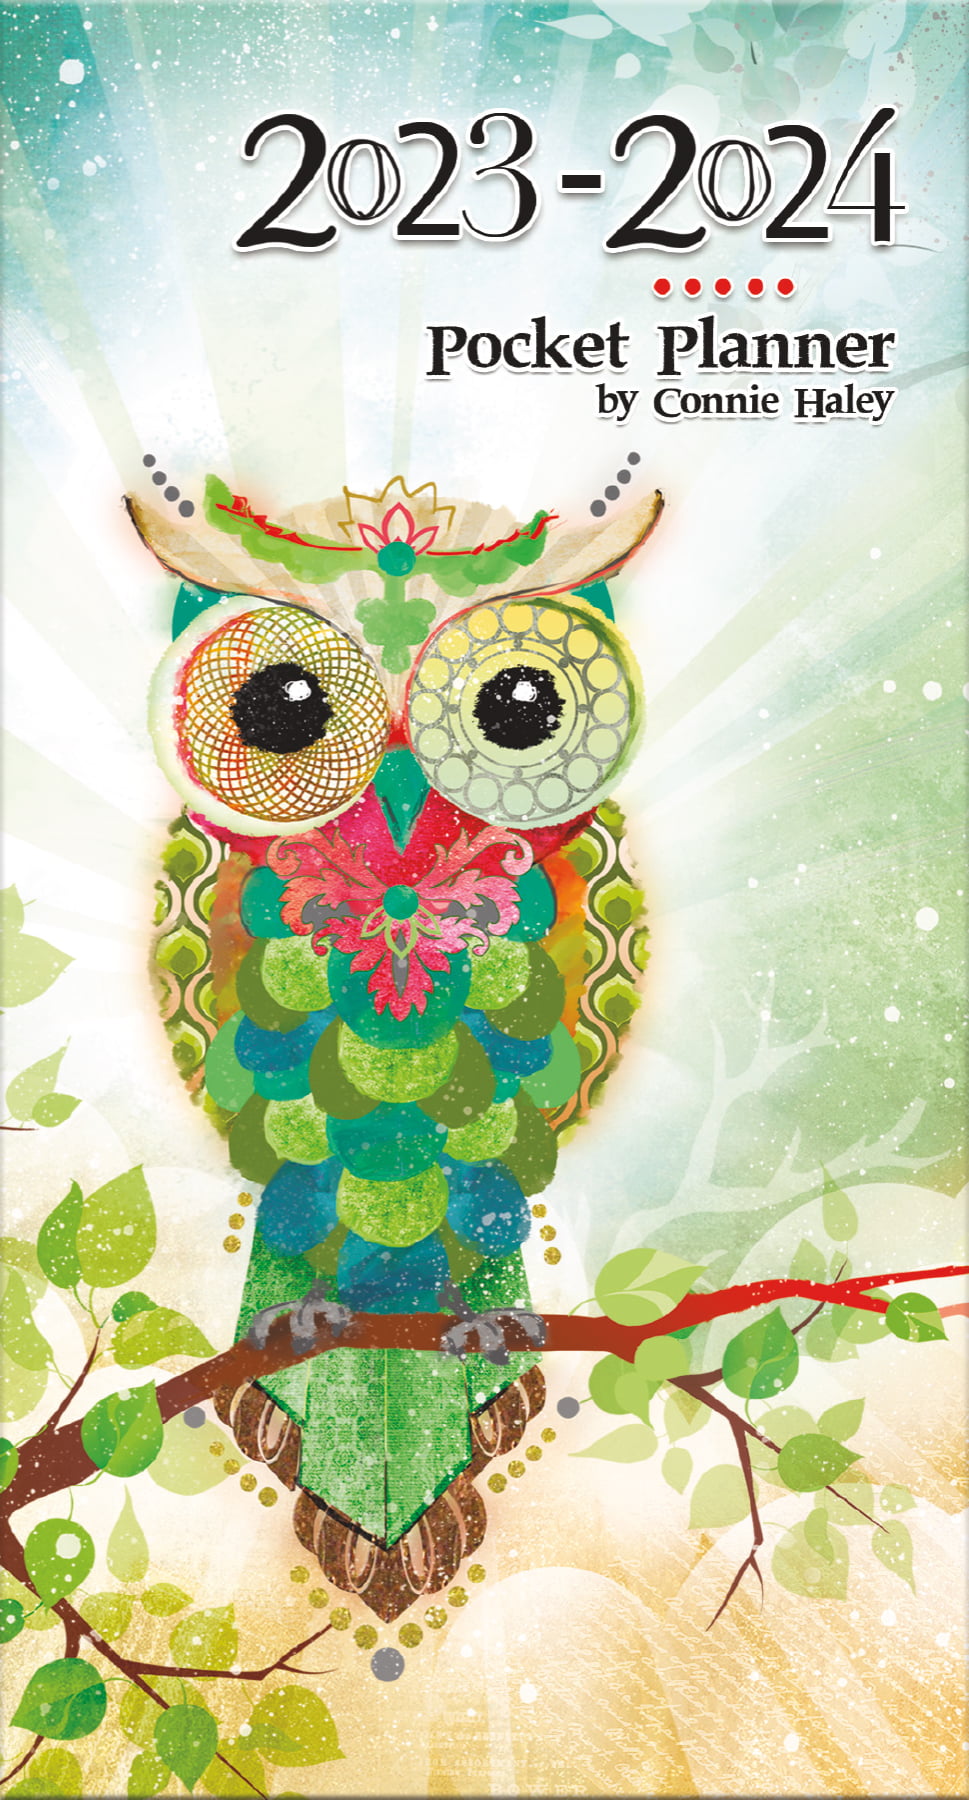 2 Year Pocket Monthly Calenda Planner  Schedule Organizer Appointment Journal Notebook 4 x 6.5 inch cute owls design 2018-2019 Pocket Planner 